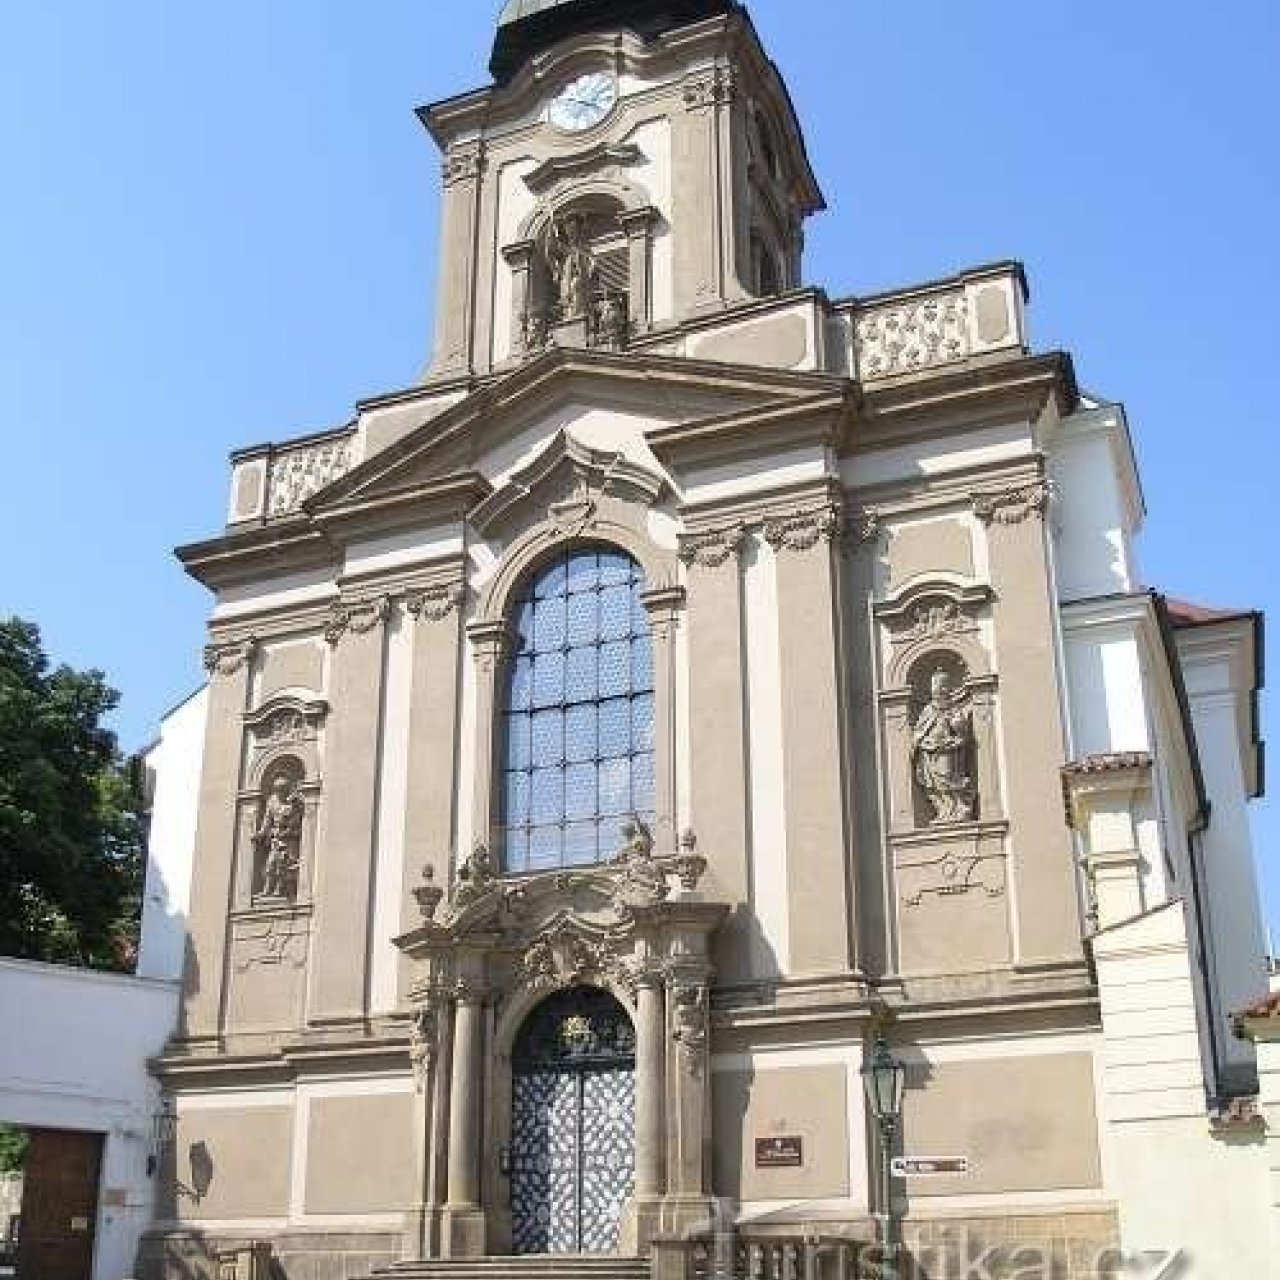 Praha, Hradčany - kostel svatého Jana Nepomuckého